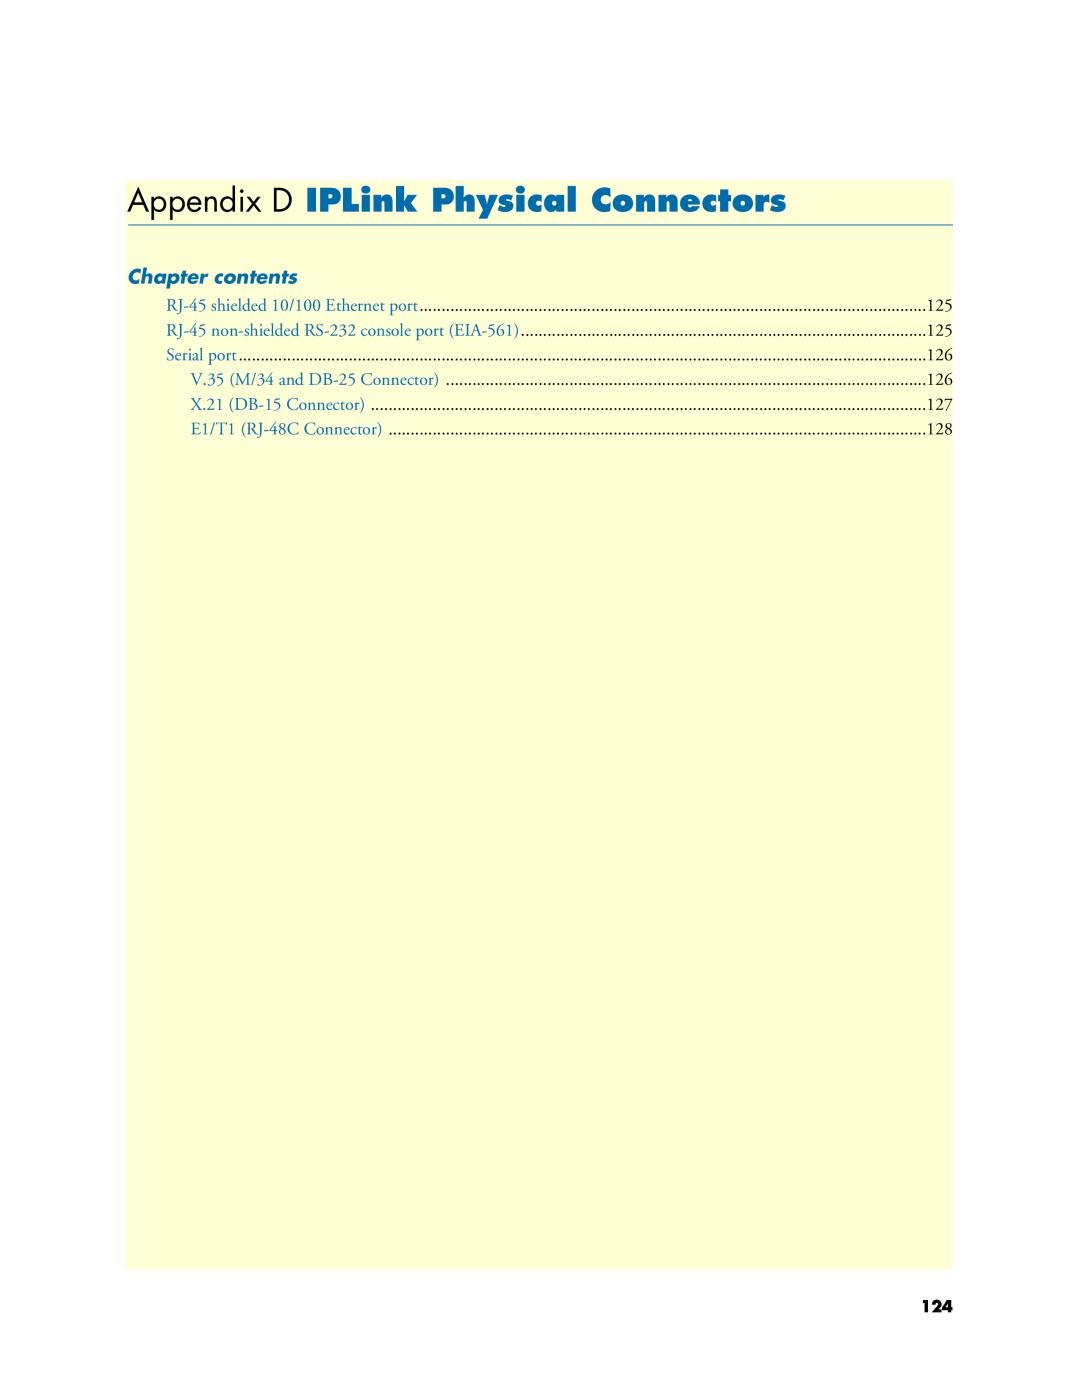 Patton electronic 2621, 2635 manual Appendix D IPLink Physical Connectors, Chapter contents 